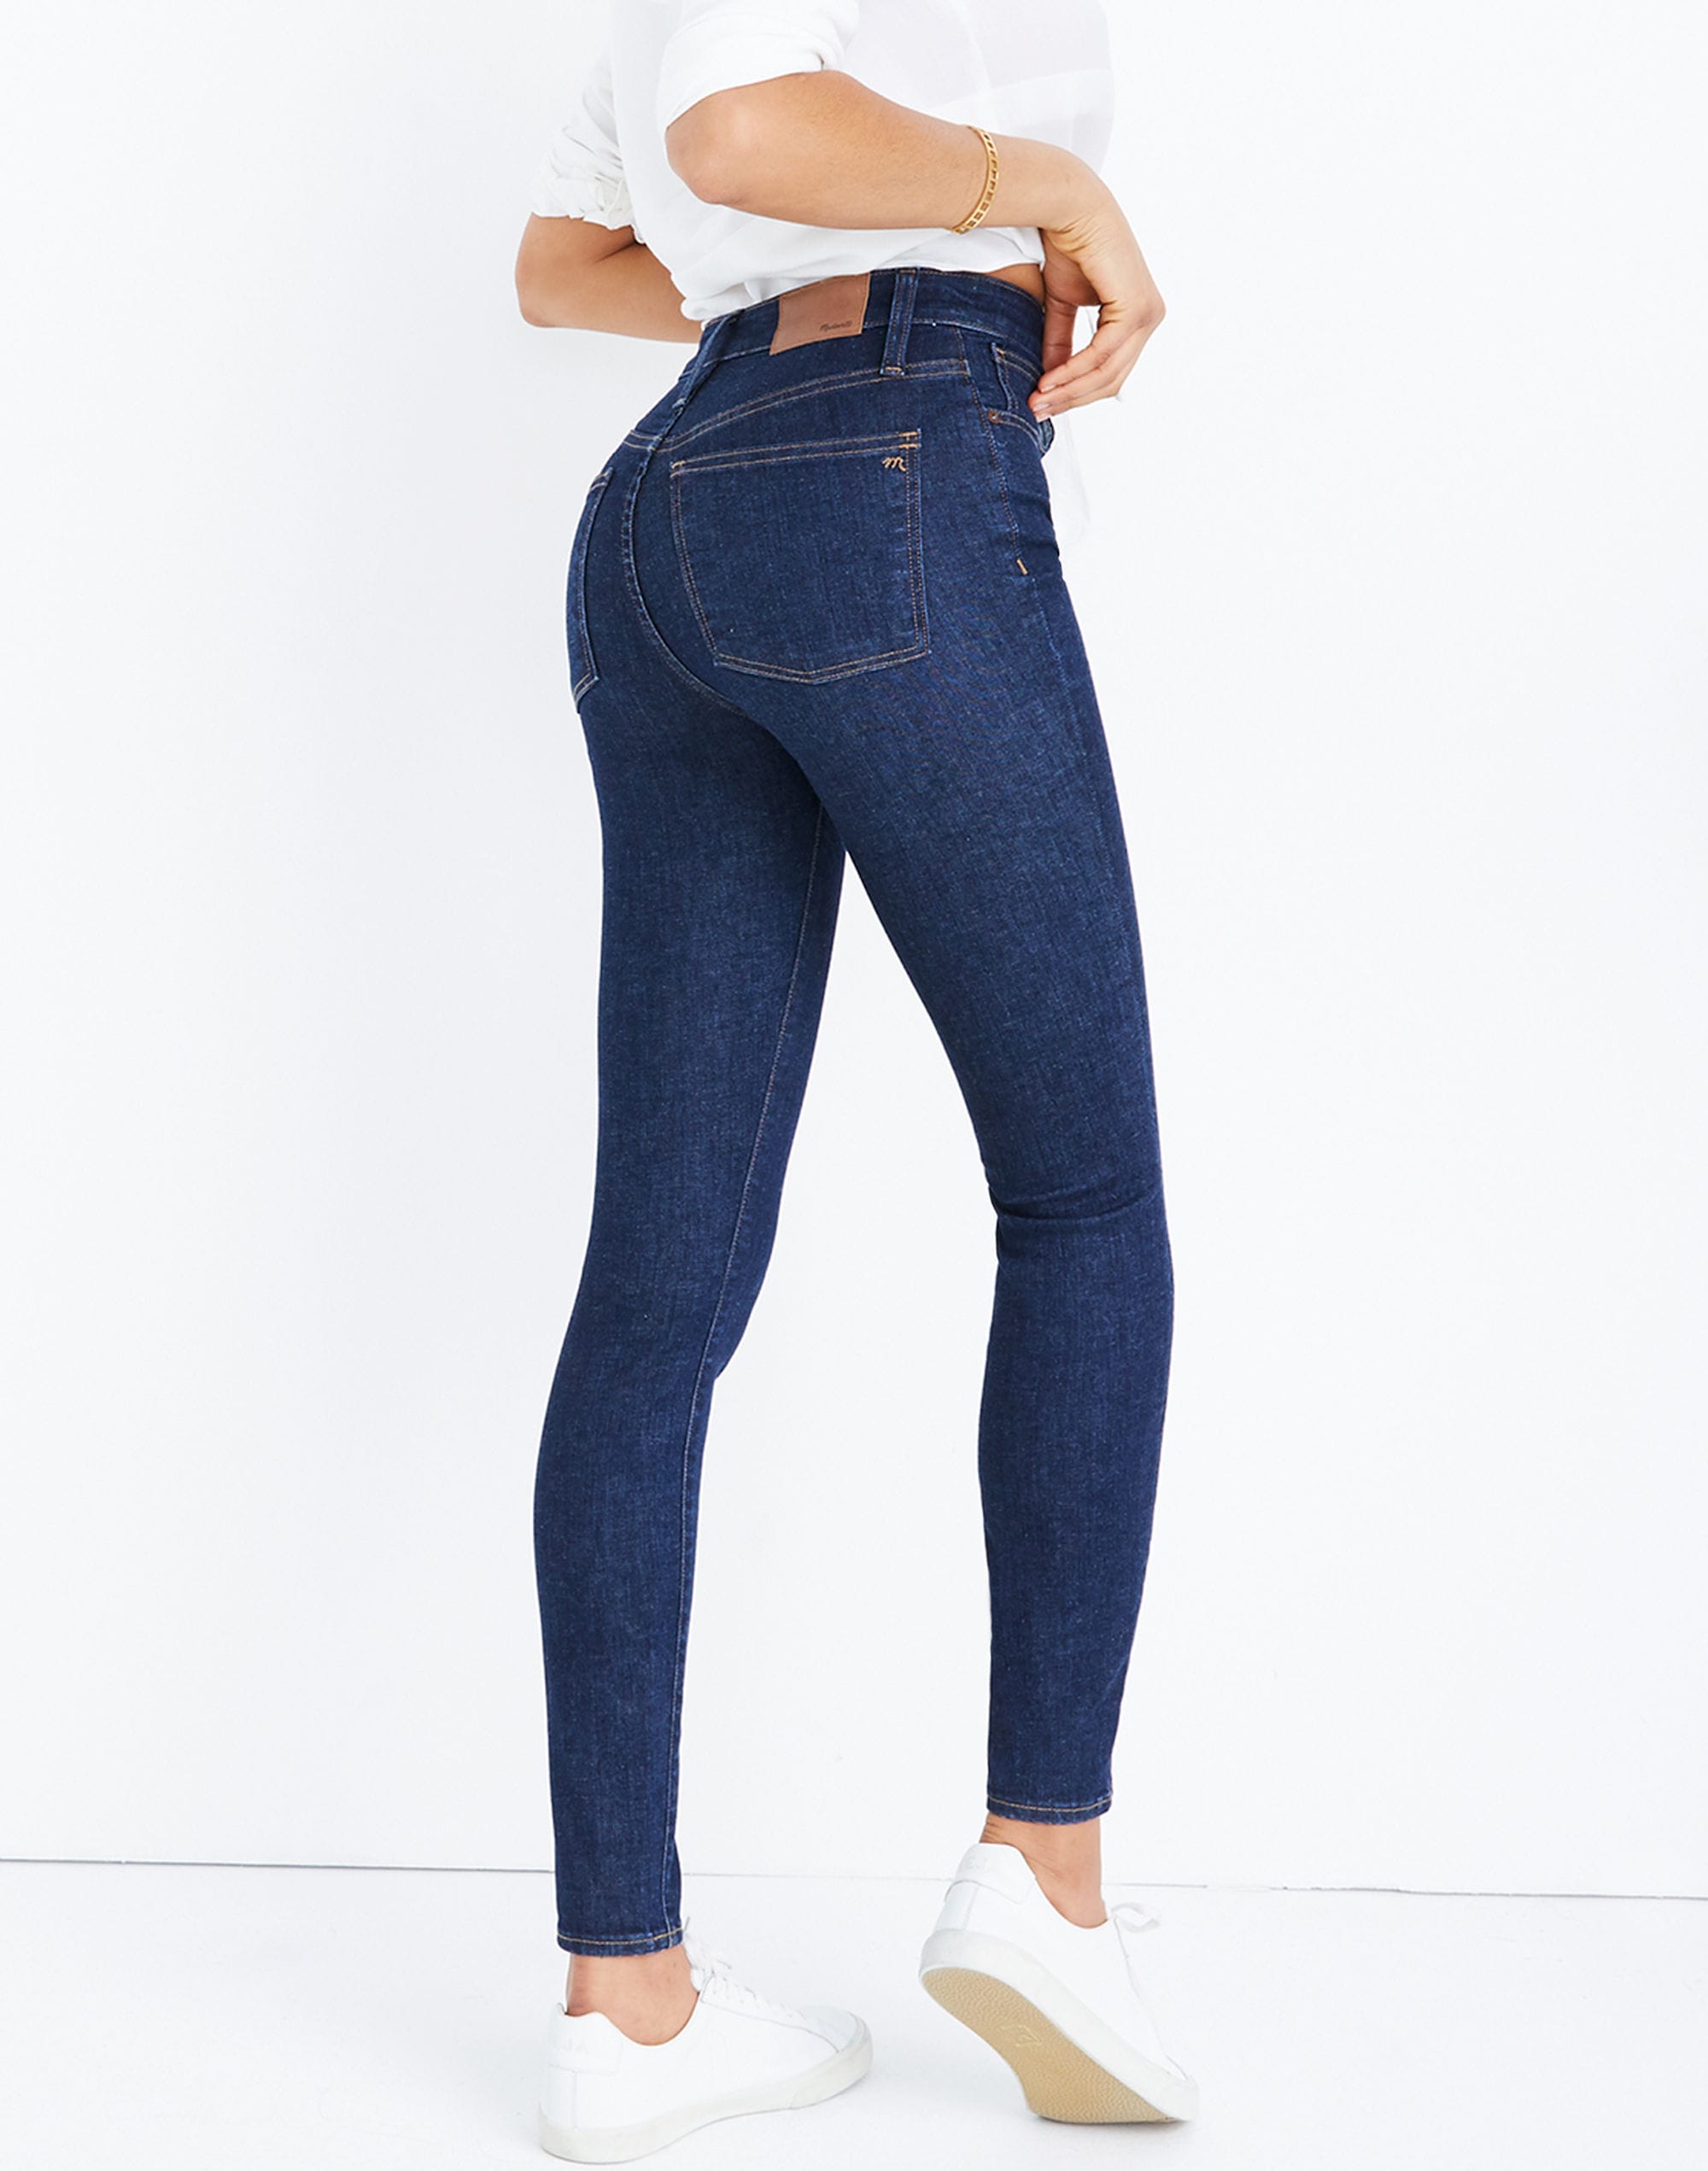 Sexy Women High Waist Pants Stretch Skinny Pencil Tight Jeans Slim Trousers  B 